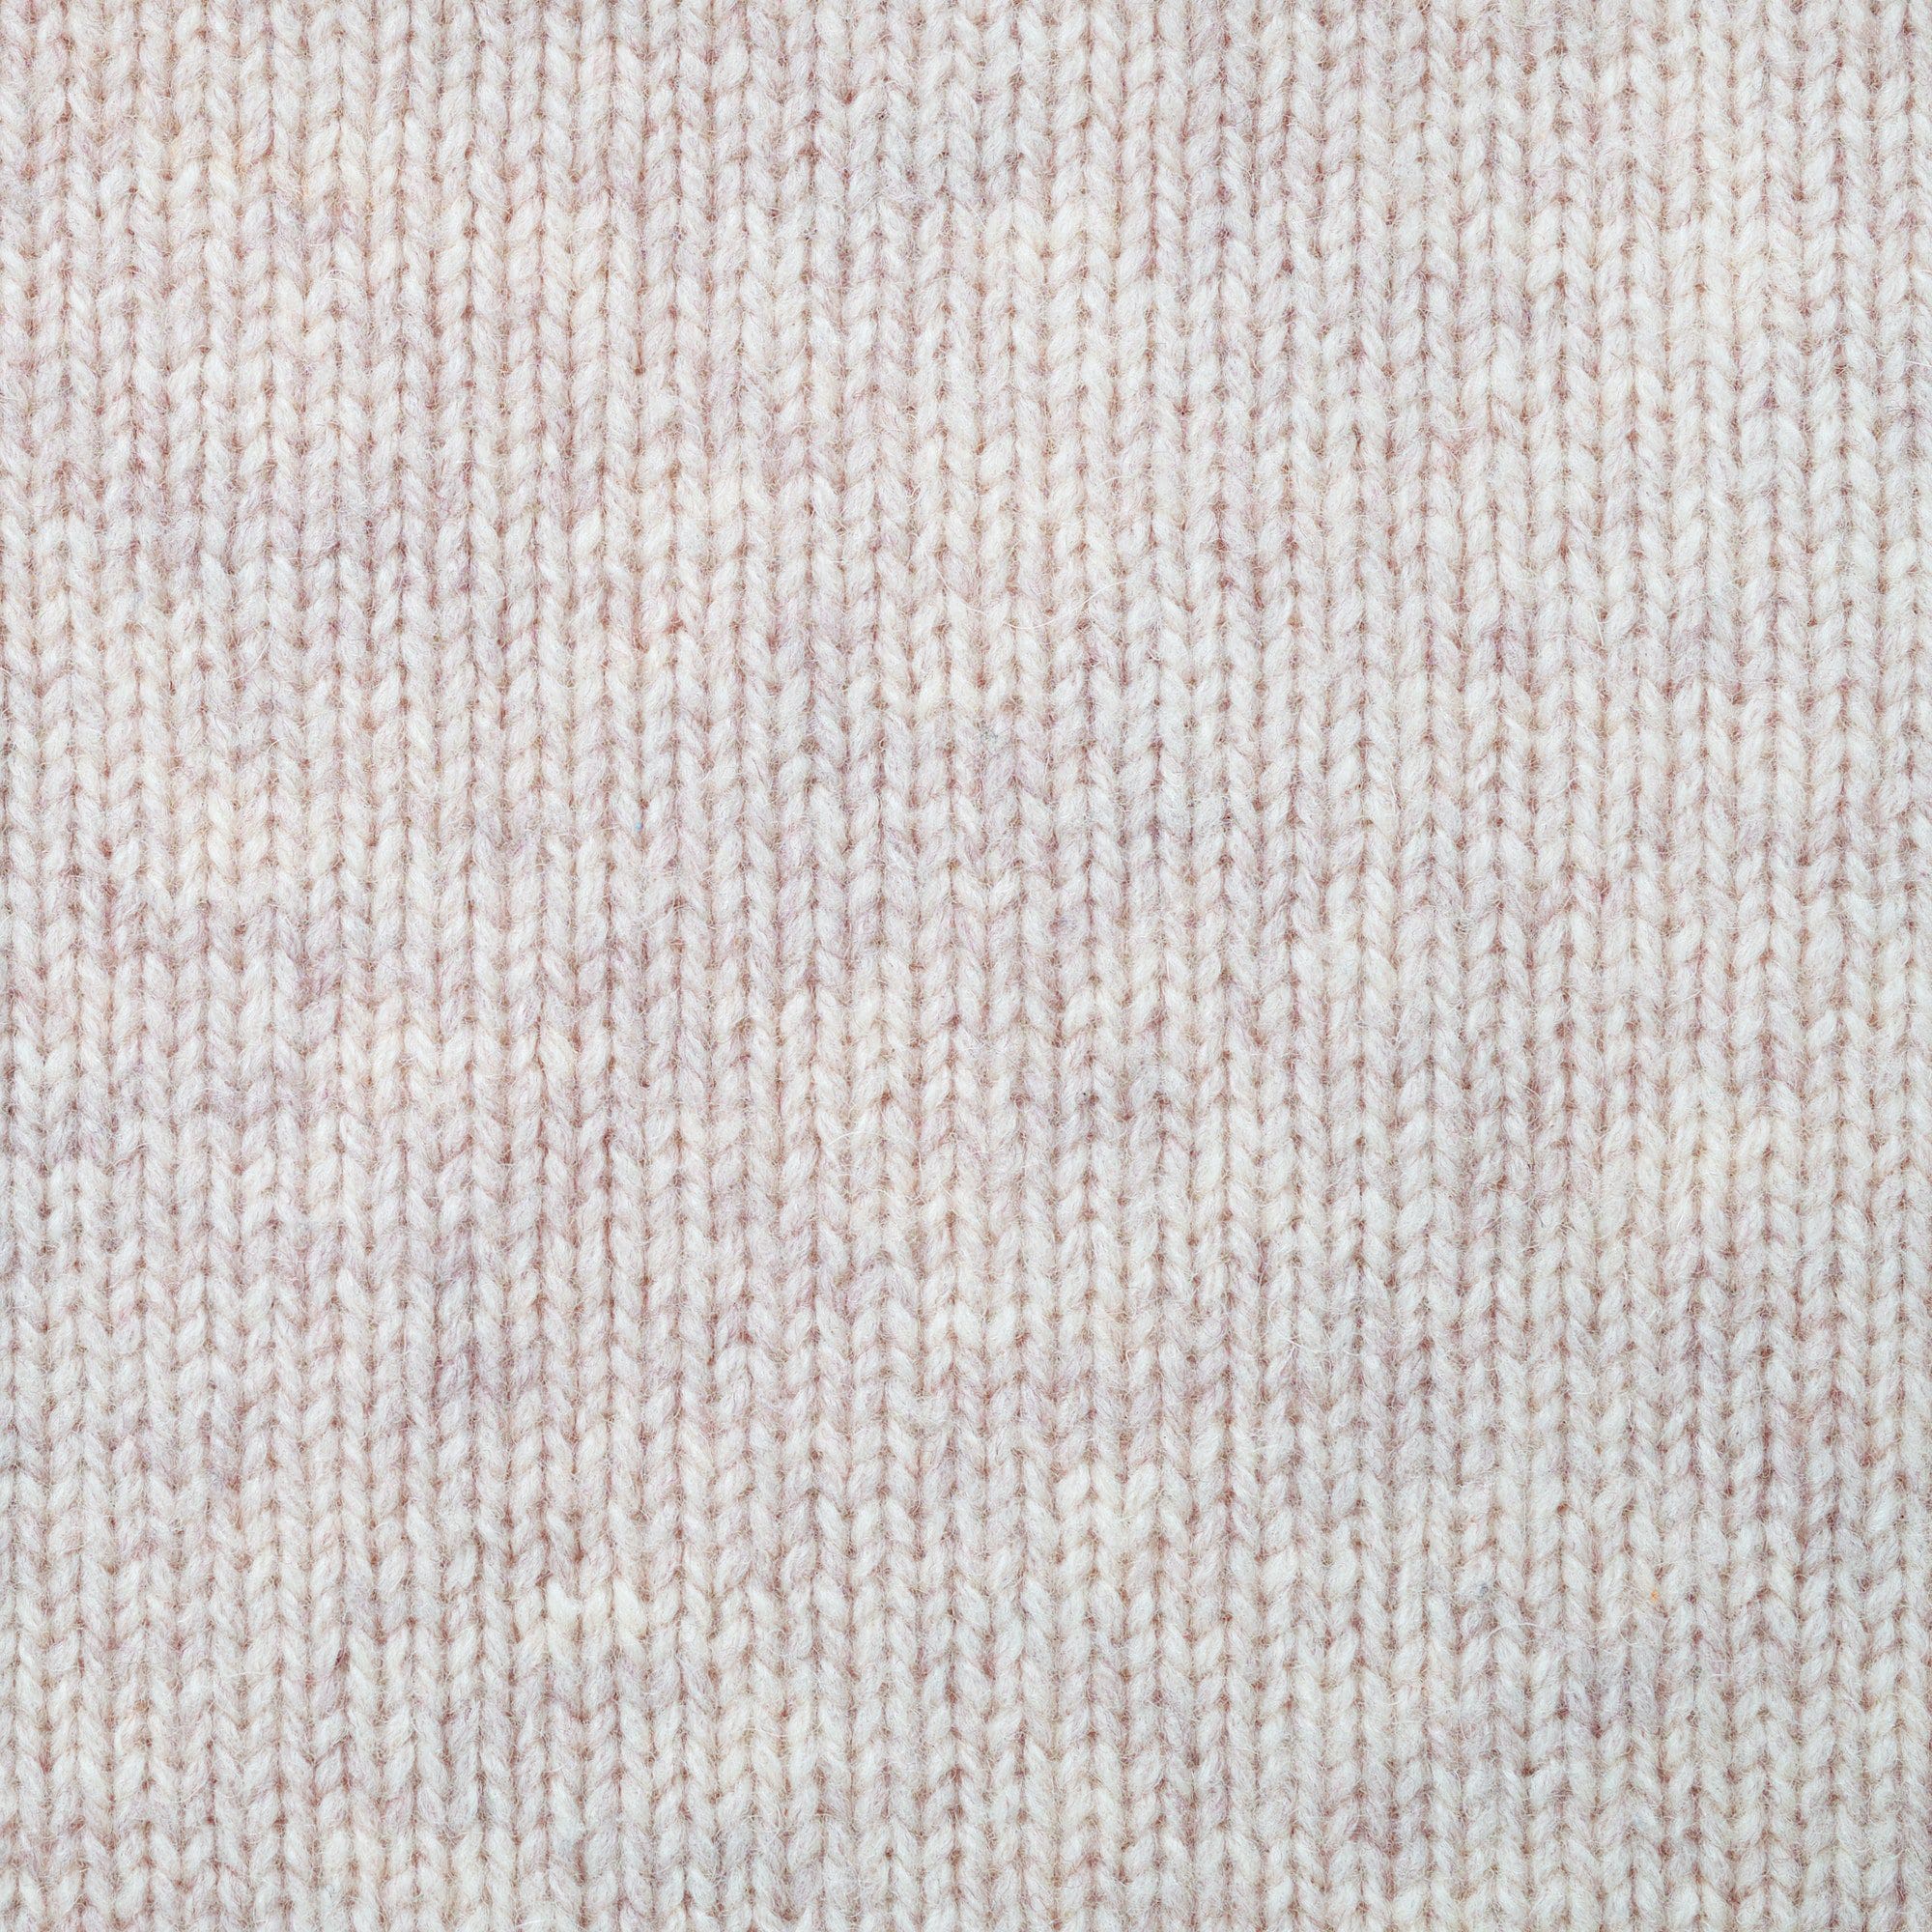 Knitted woollen texture background. Plain knitting